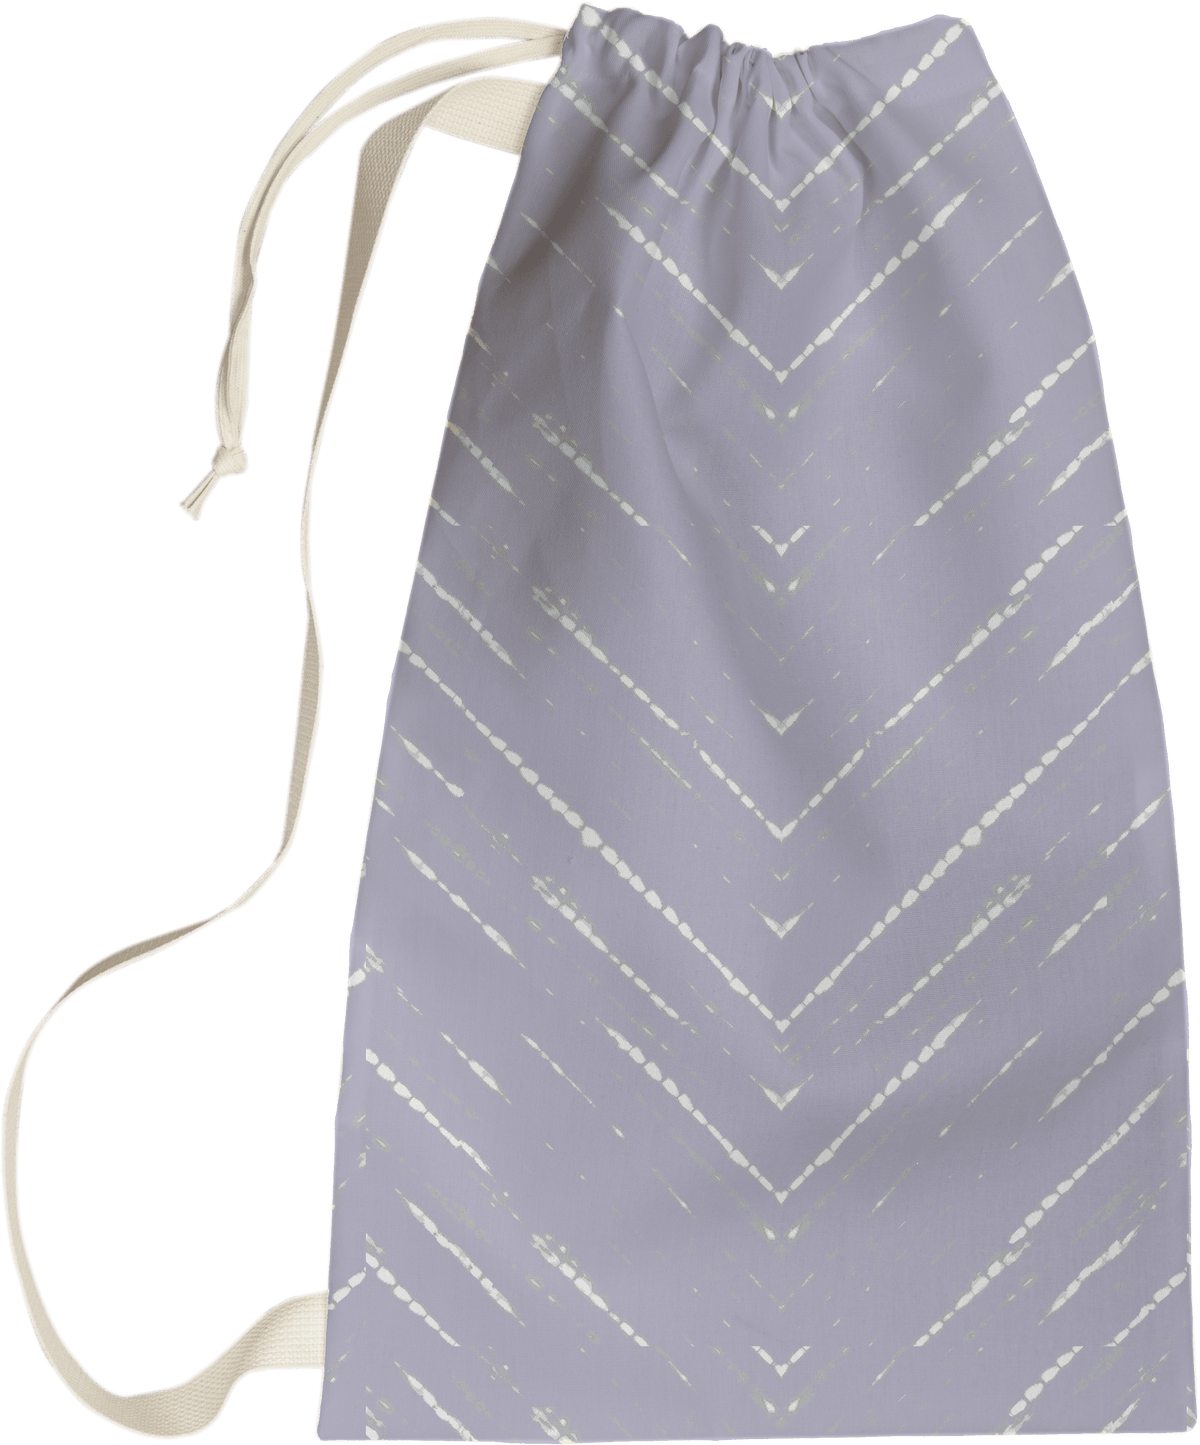 Laundry Bag - Mariko Lavender Room Accessories, Laundry Bags MWW 